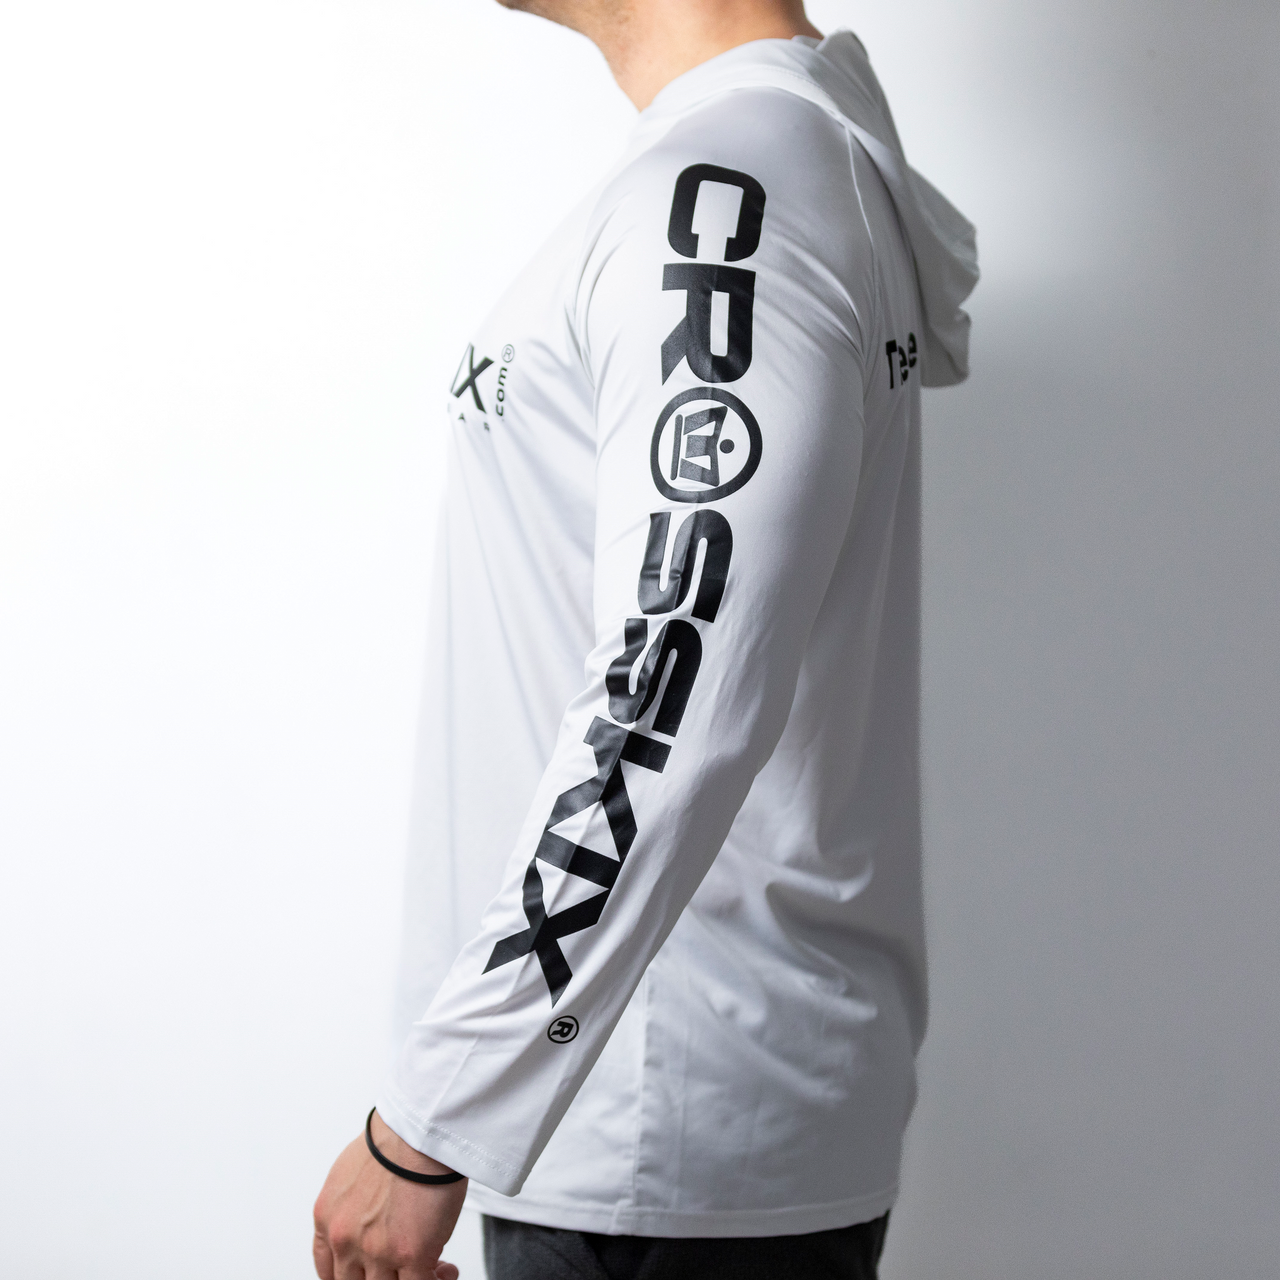 Crosskix Hooded Long Sleeve Athletic Performance Shirt - UPF30